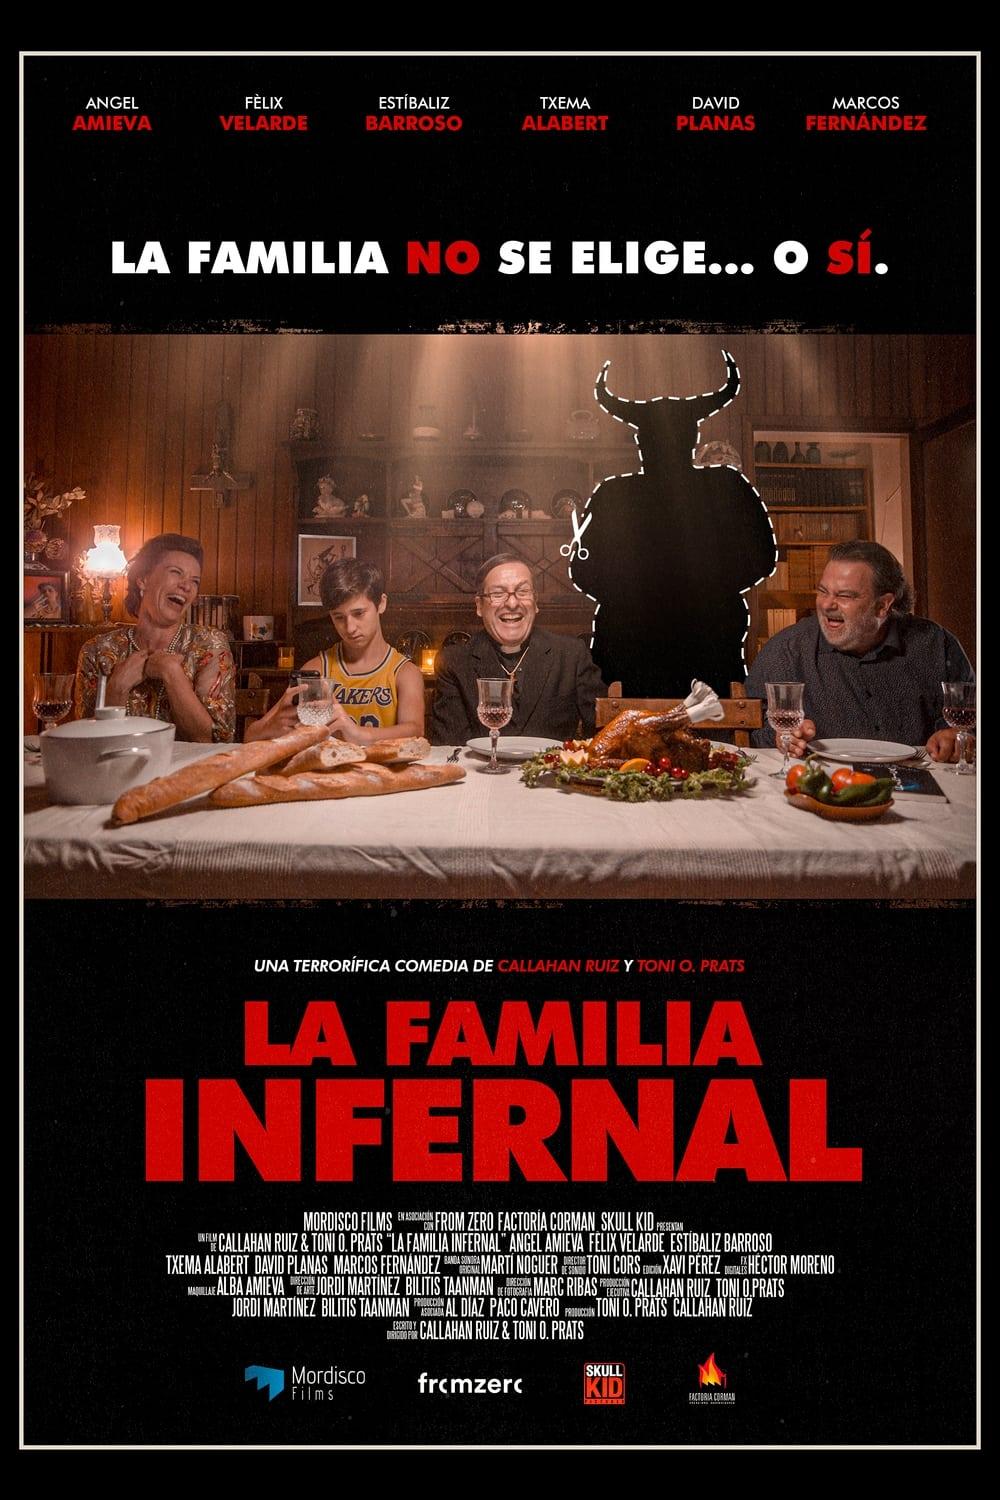 La familia infernal poster